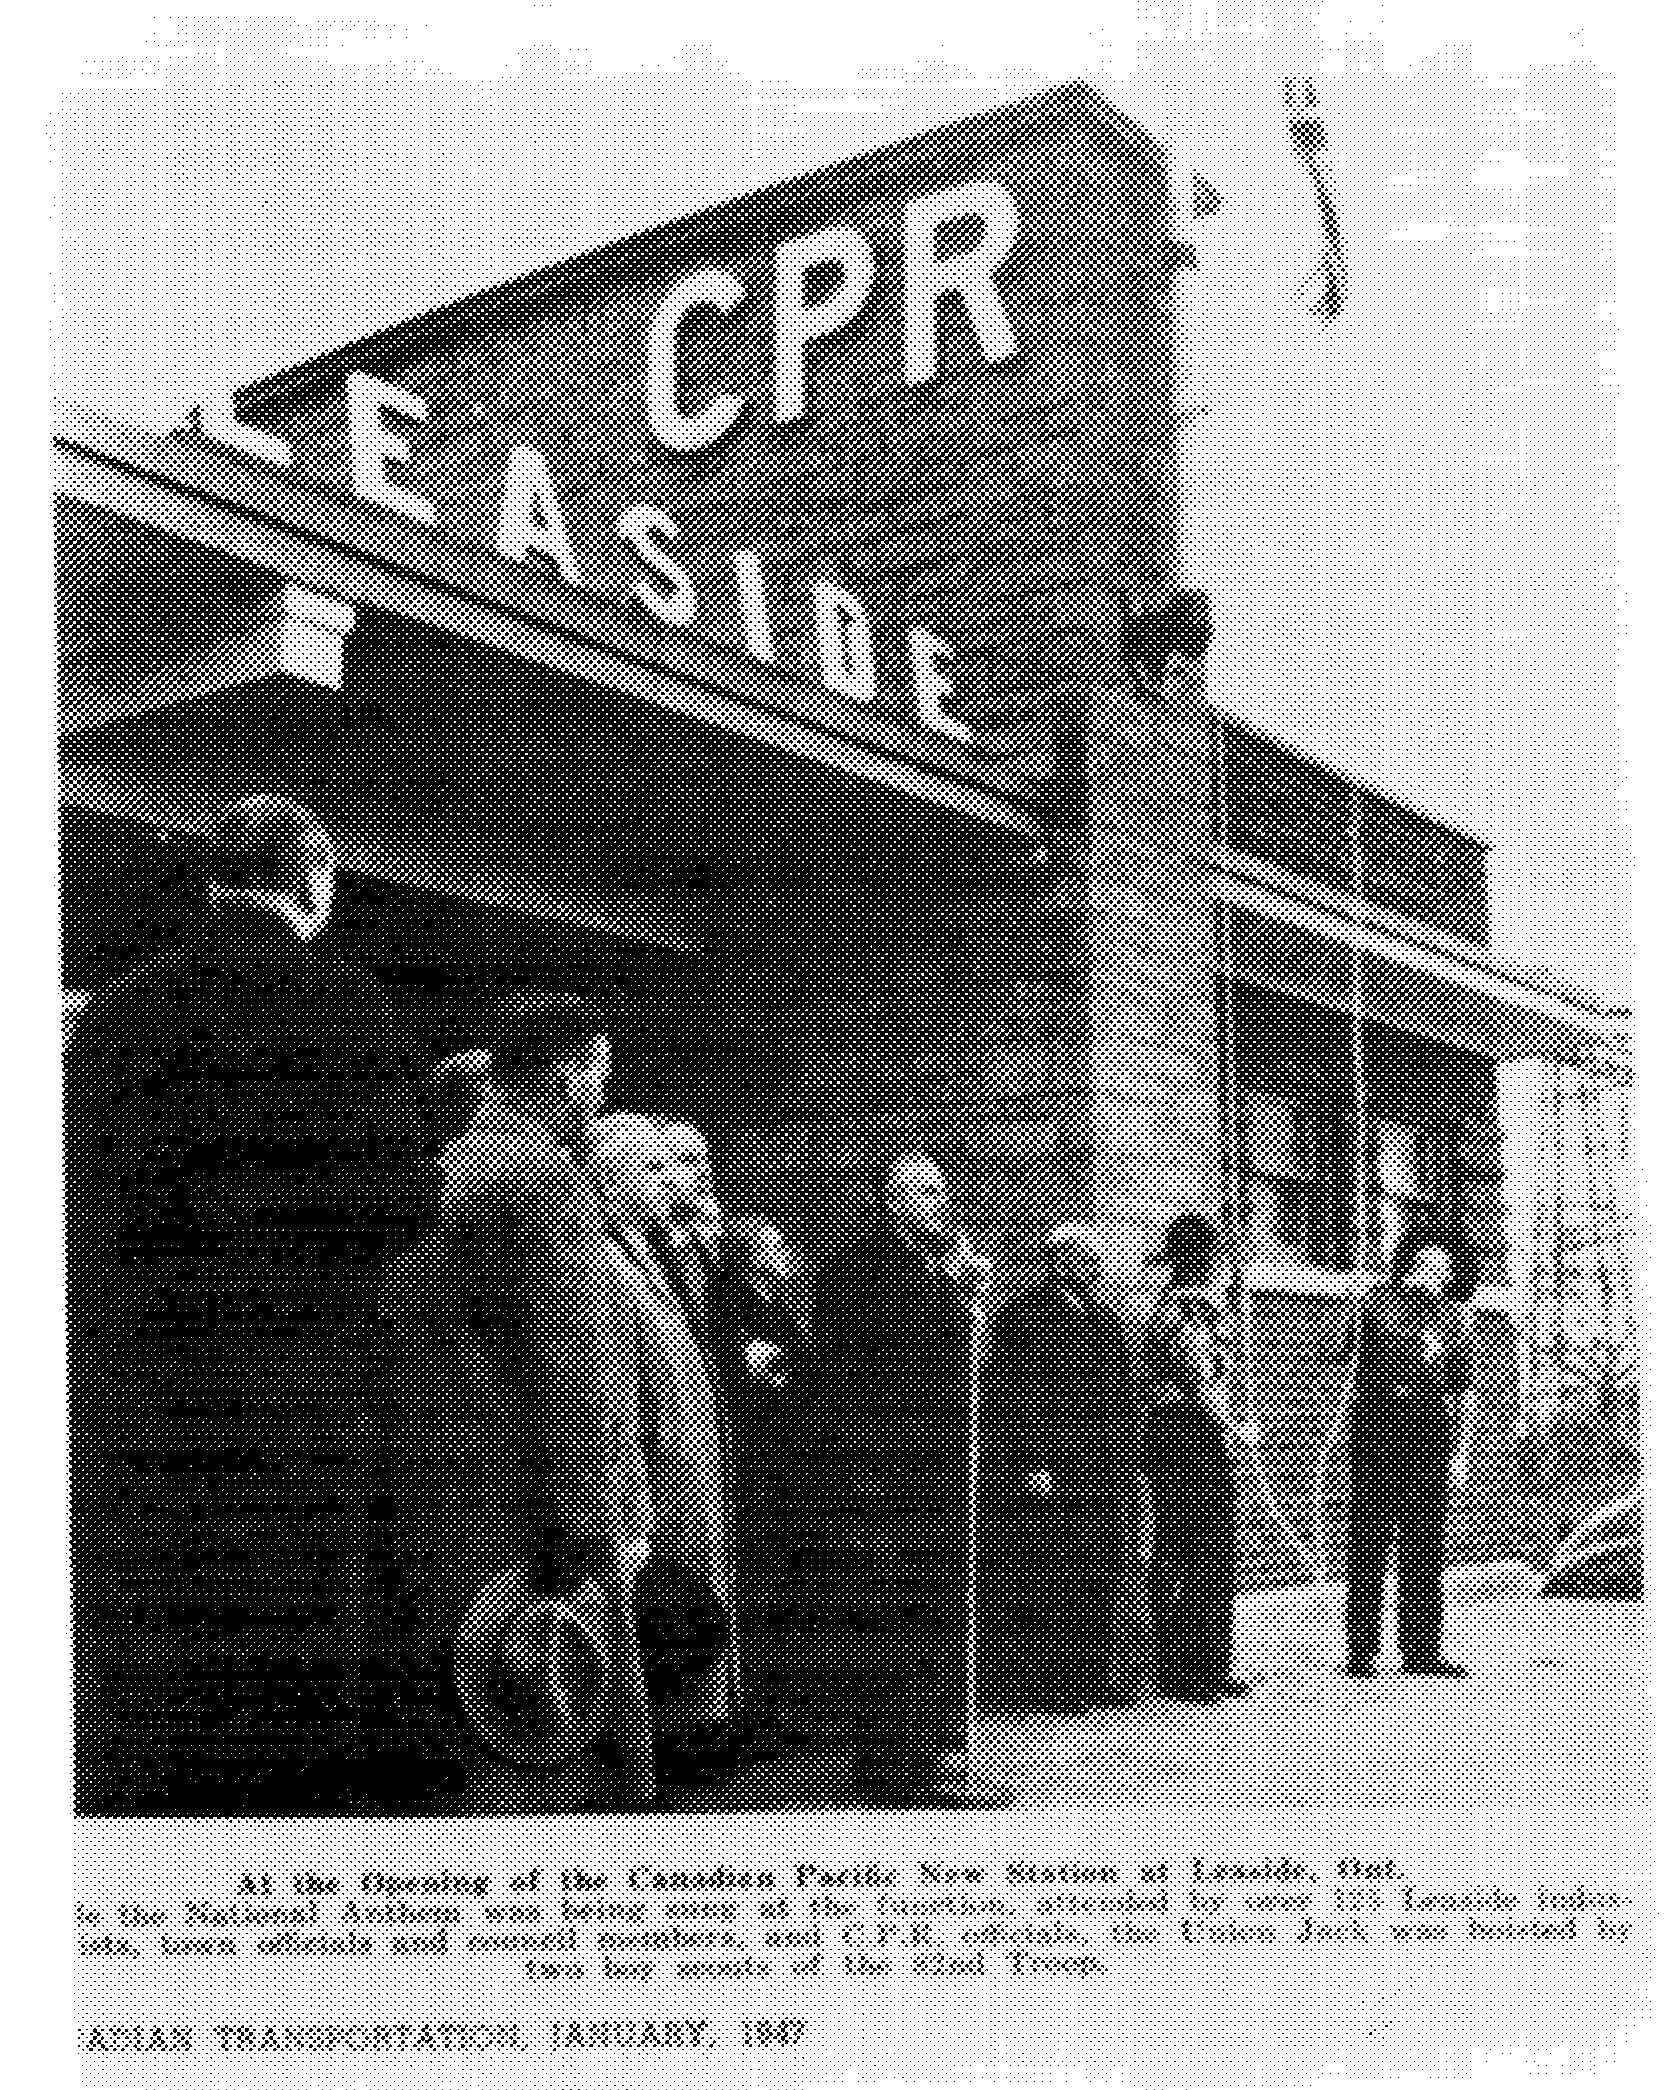 CPR_Leaside_station_1947.jpg